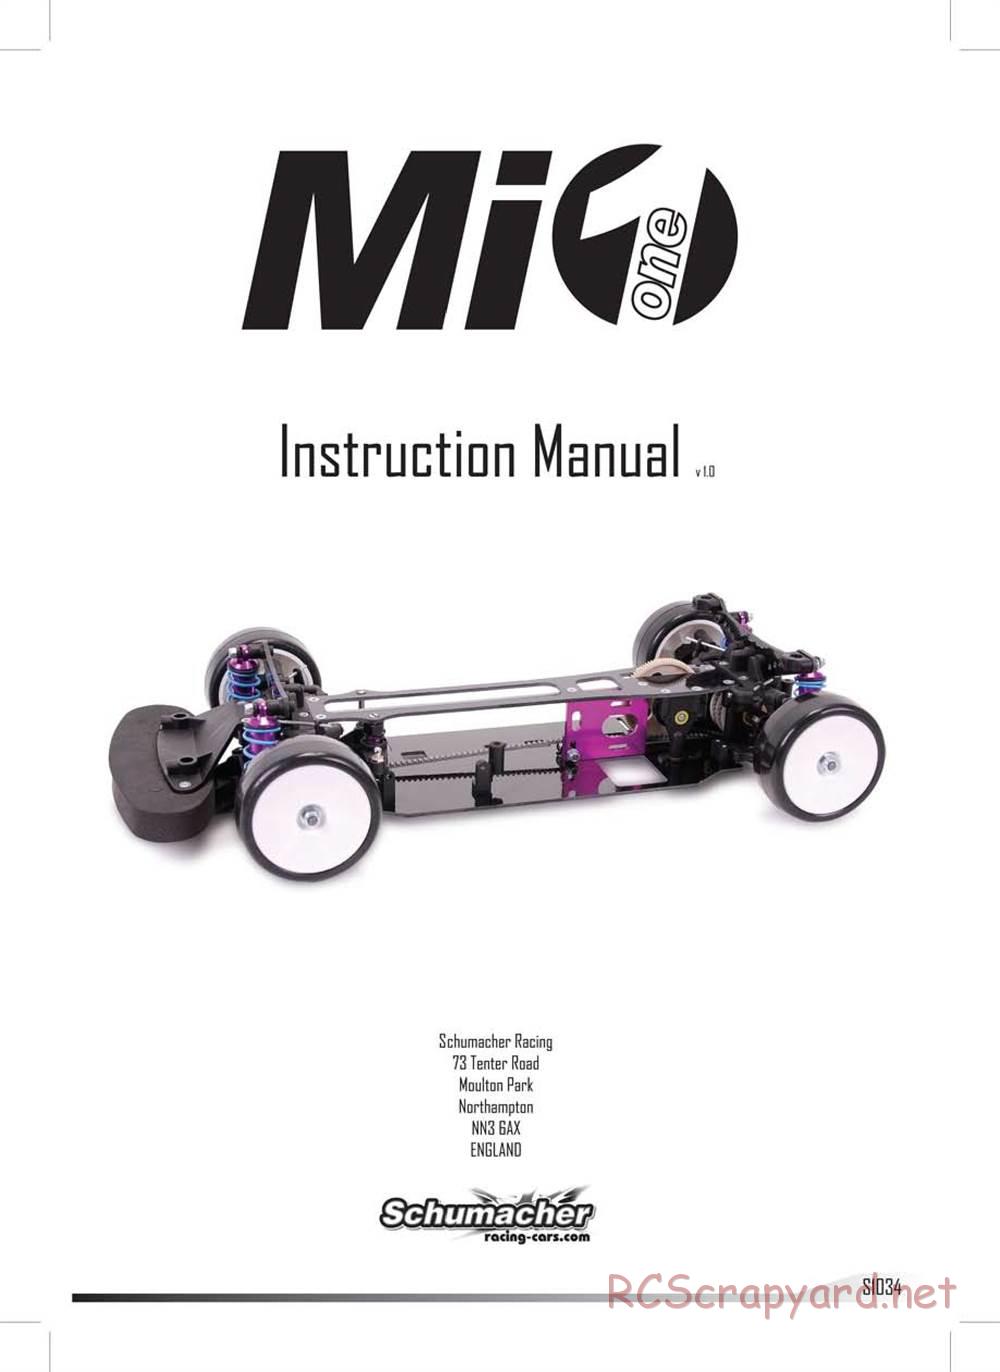 Schumacher - Mi1 - Manual - Page 1